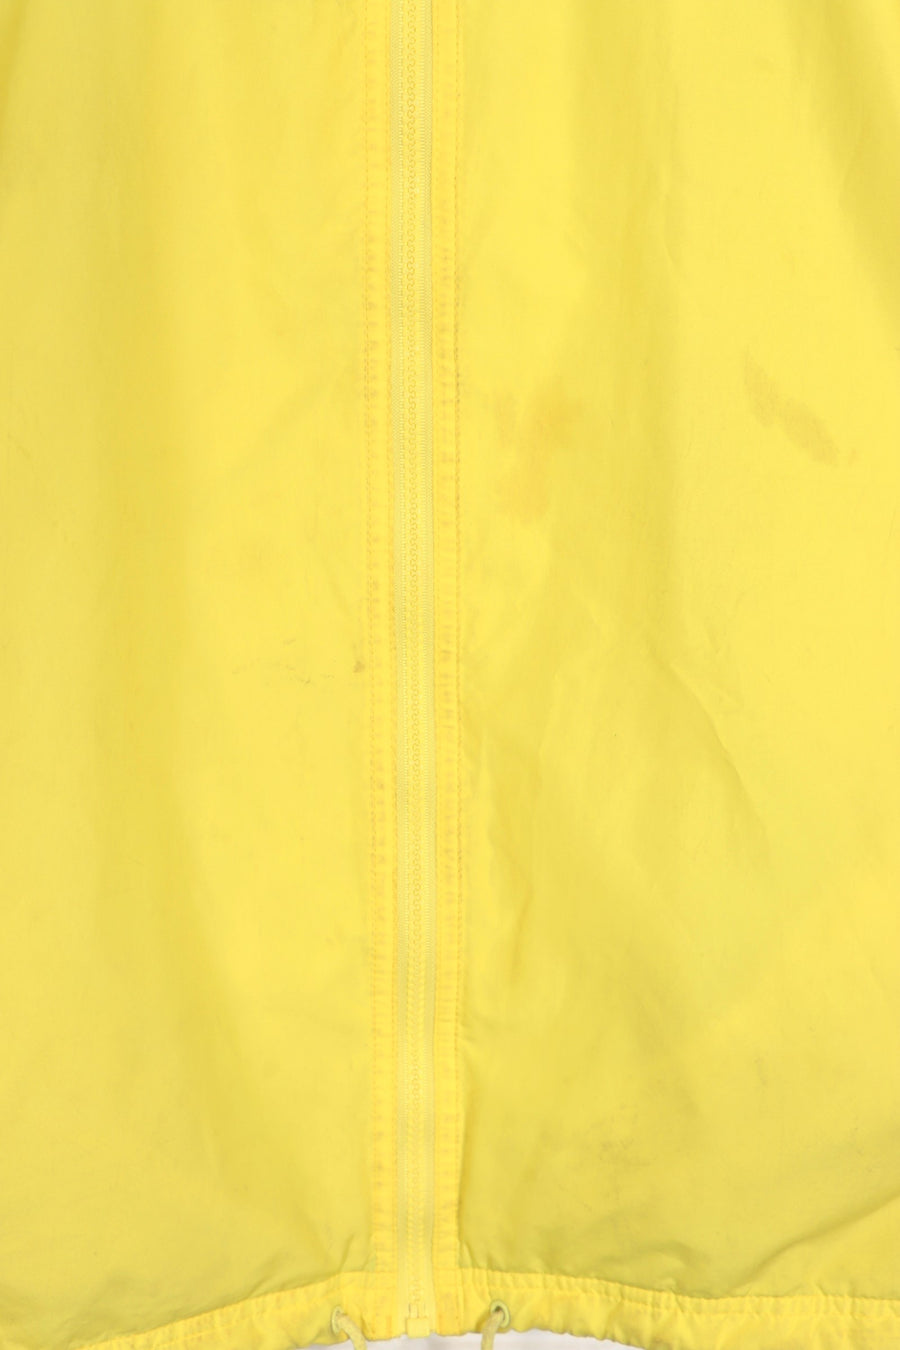 ADIDAS Yellow & Blue Zip Up Windbreaker Jacket (L)